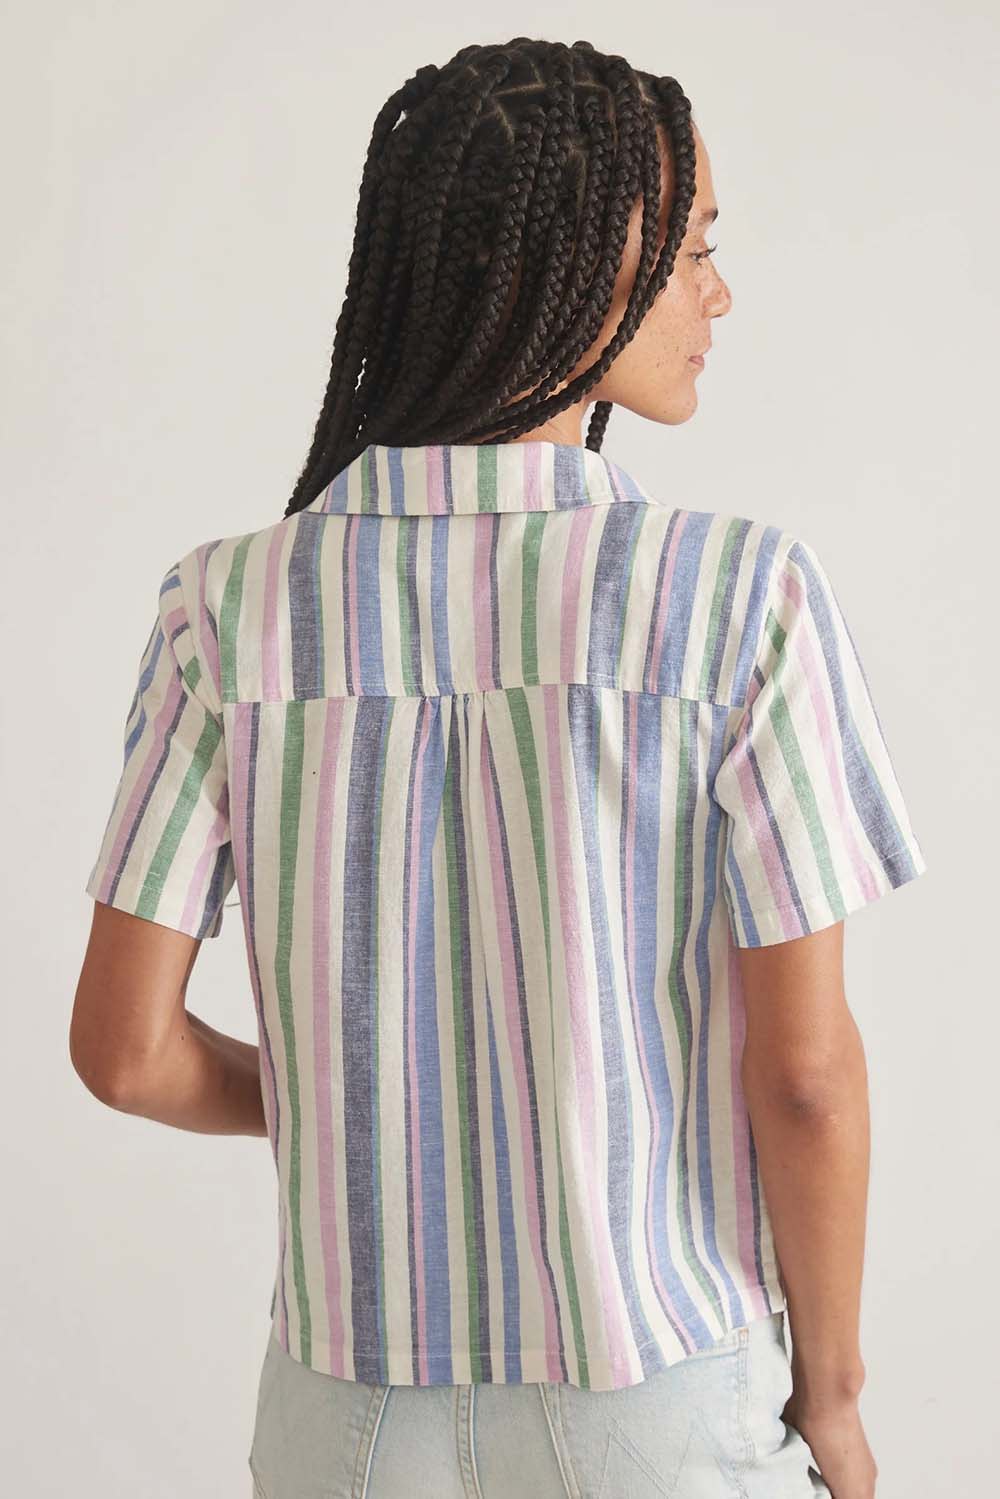 Marine Layer - Lucy Resort Shirt - Cool Stripe - Back